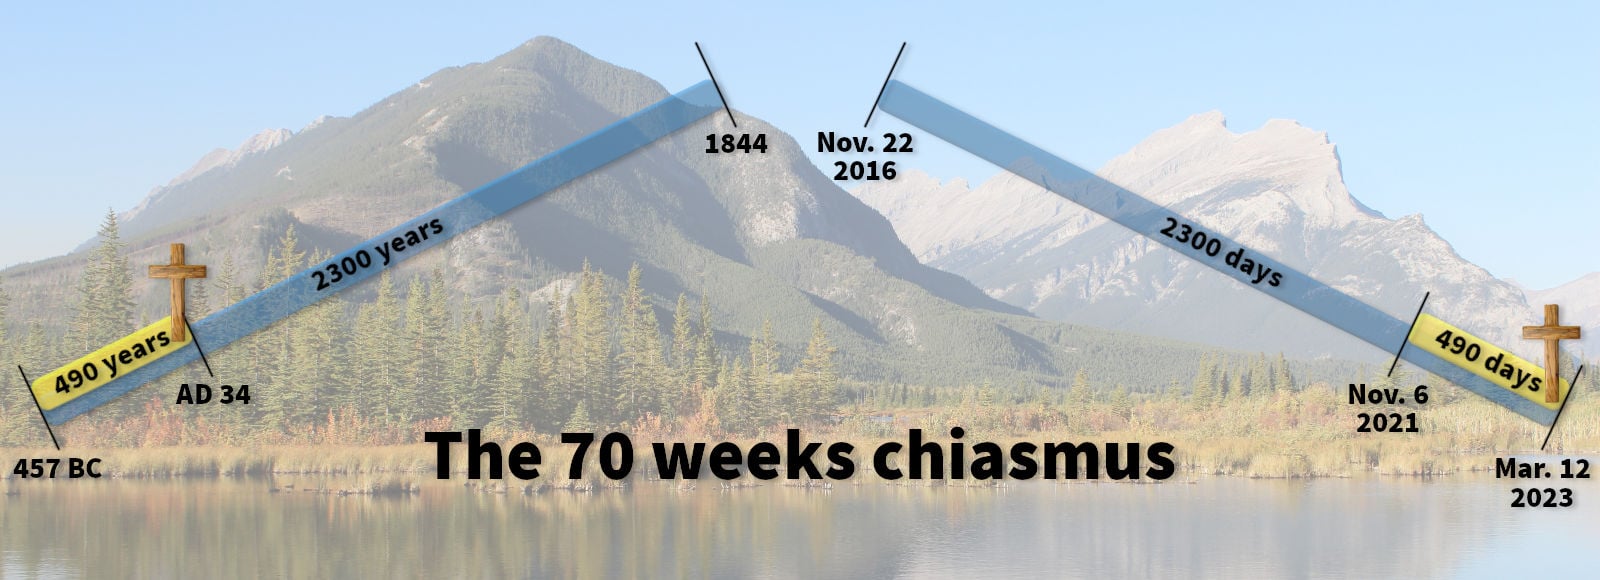 Chiasmus of the 2300 days timeline